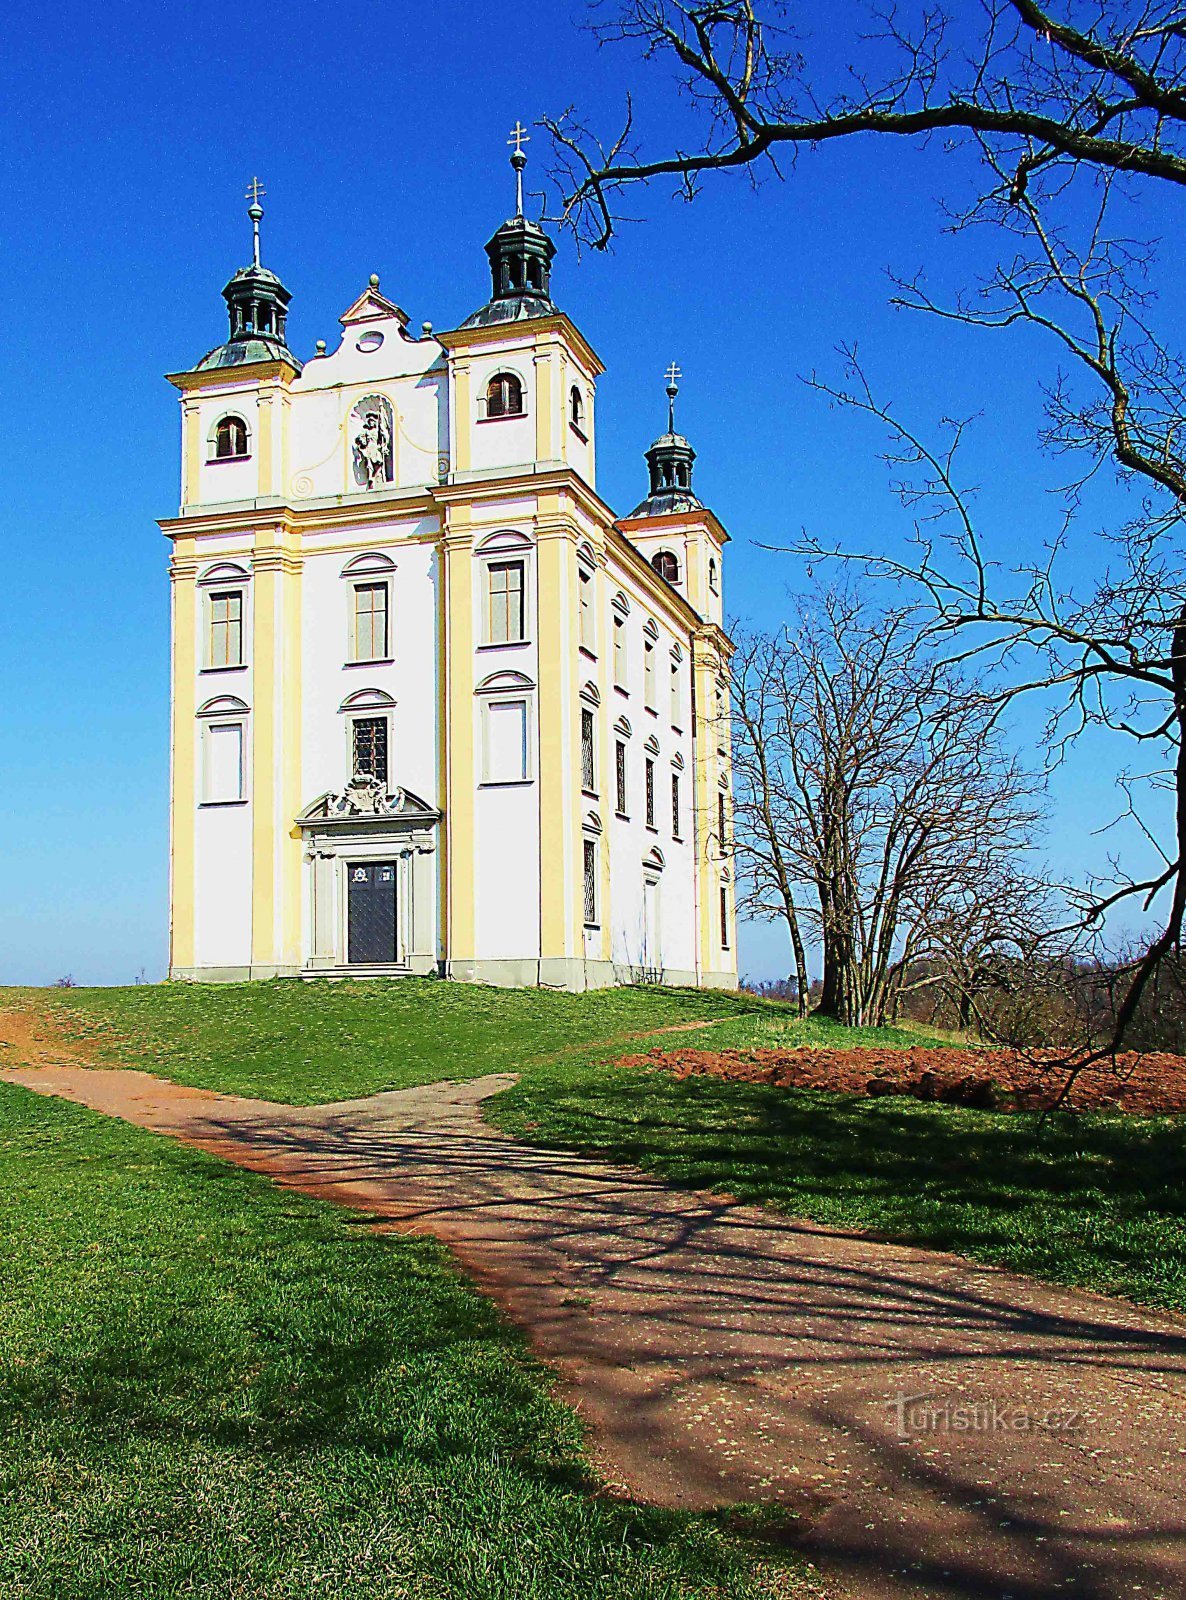 Dominanta Moravskog Krumlova - kapela sv. Florijana